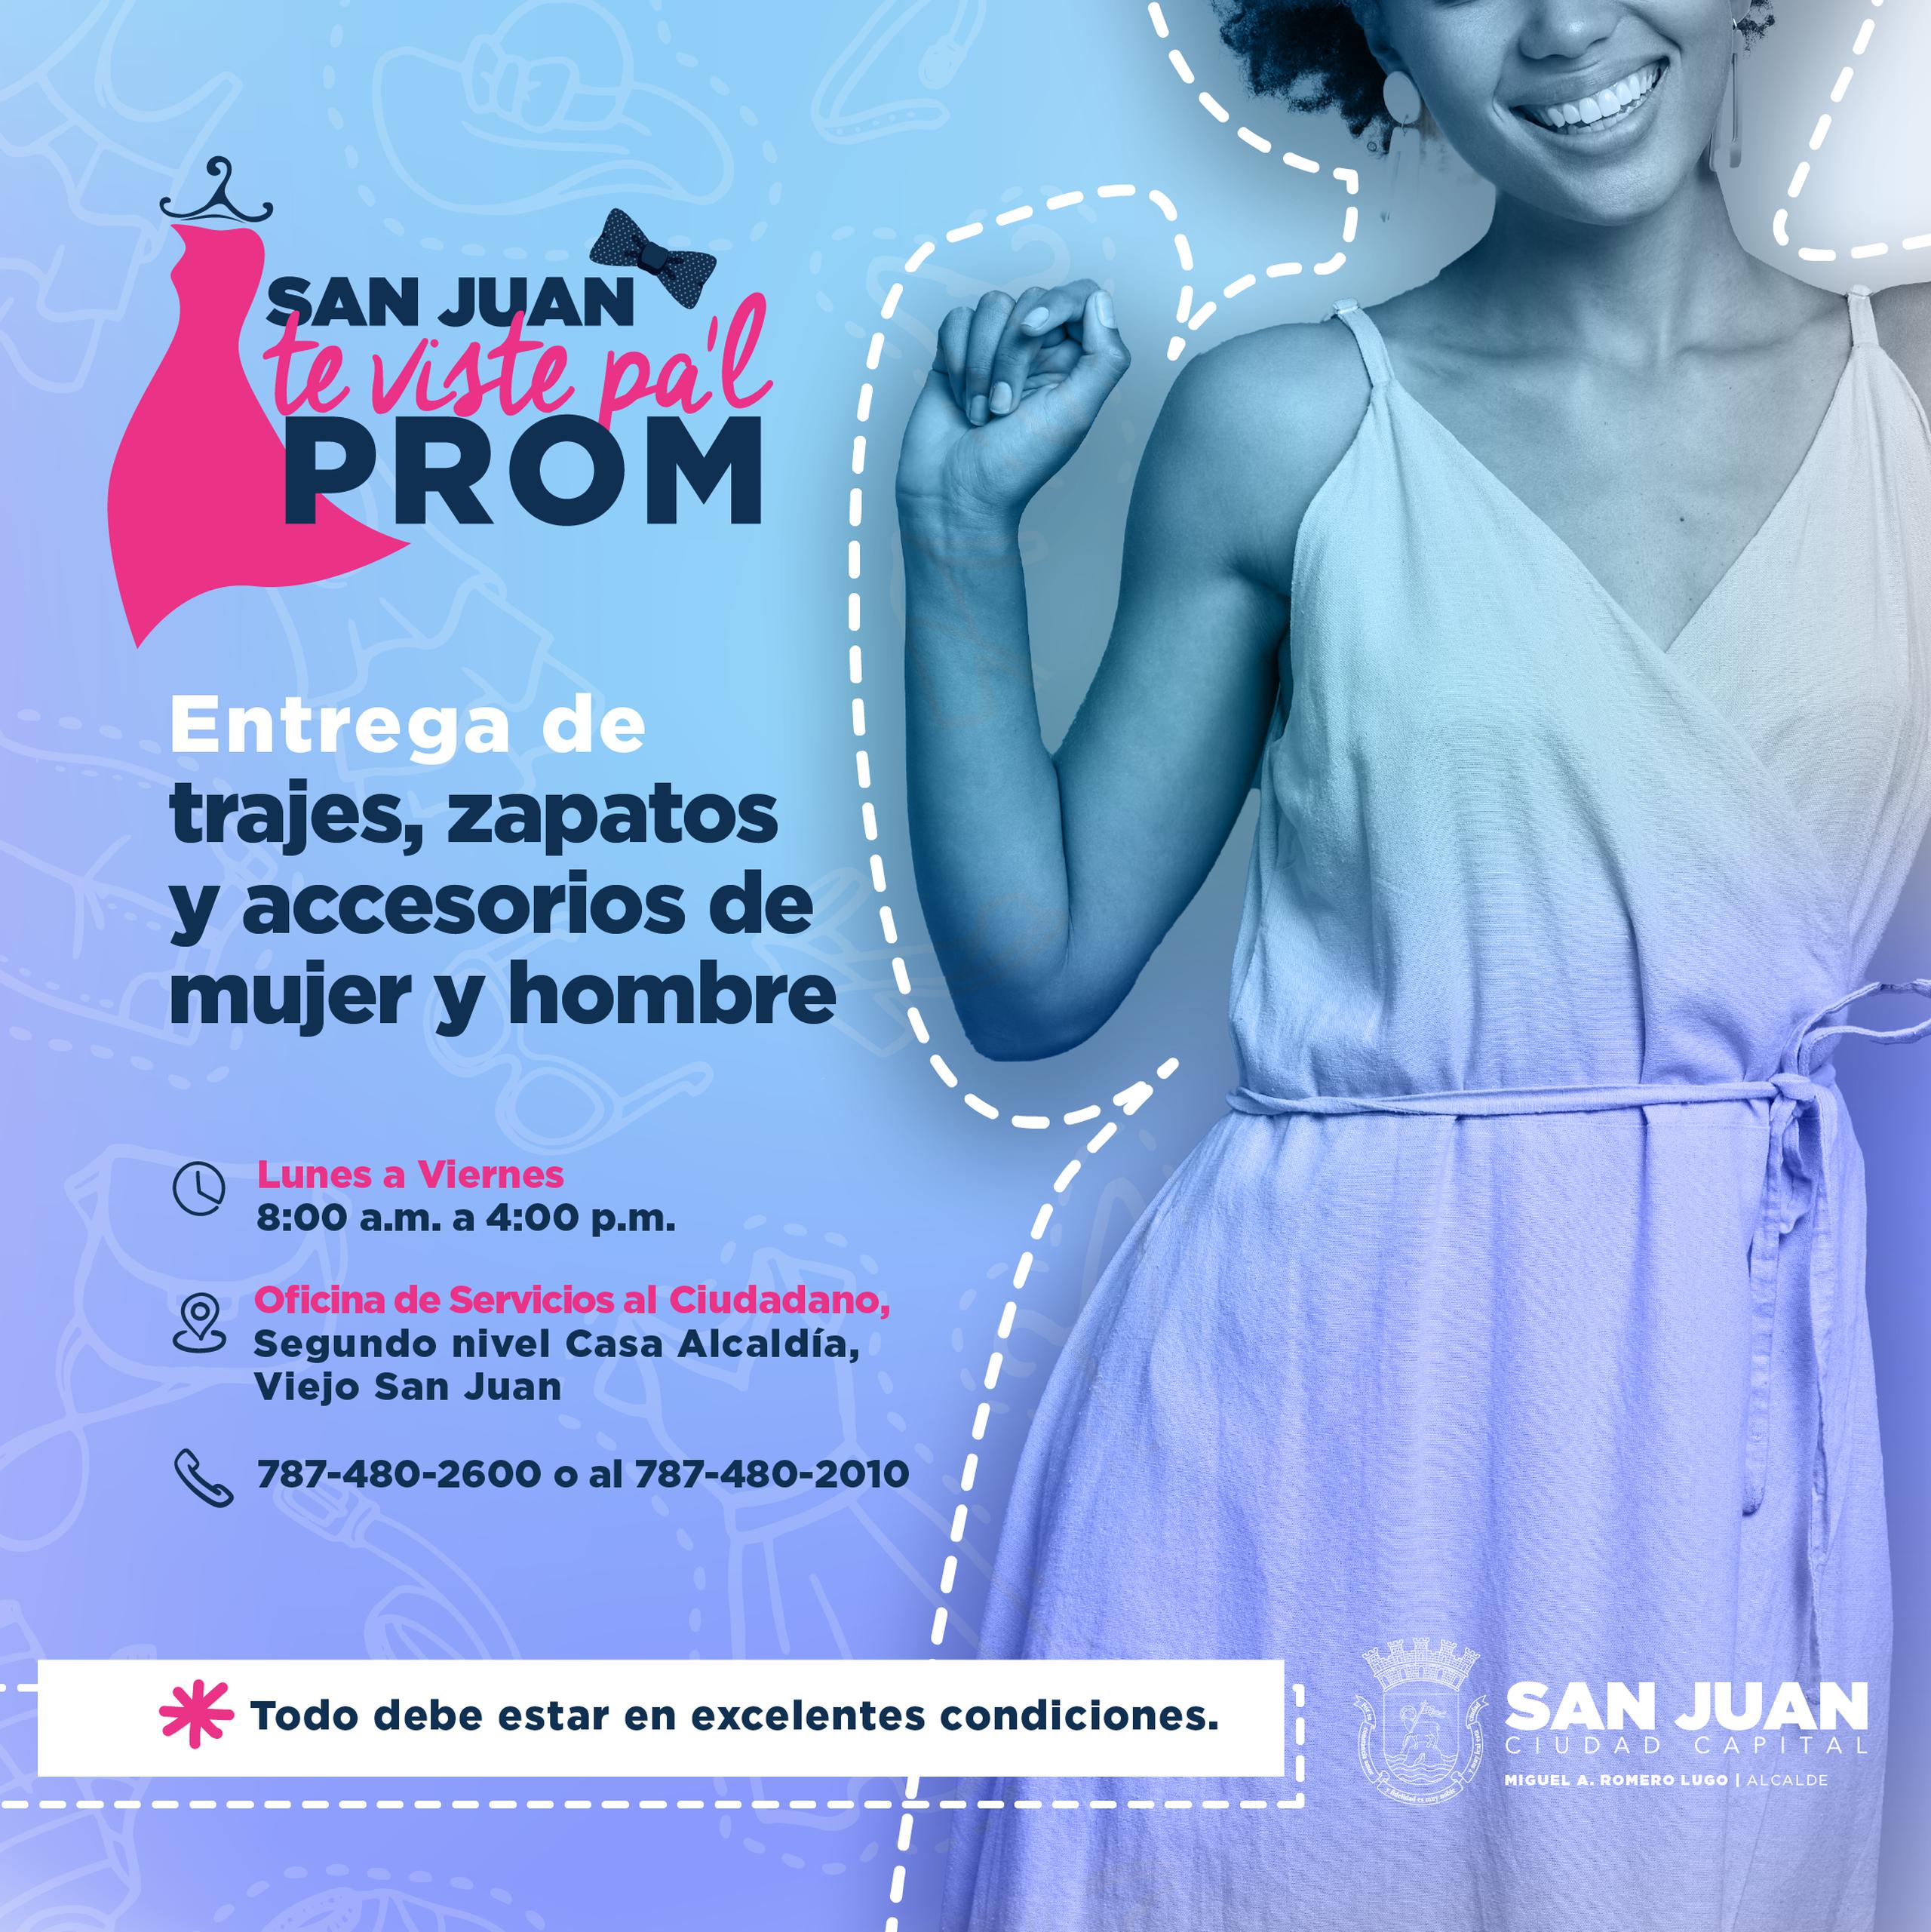 Información sobre la iniciativa "San Juan Te Viste Pa’l Prom".